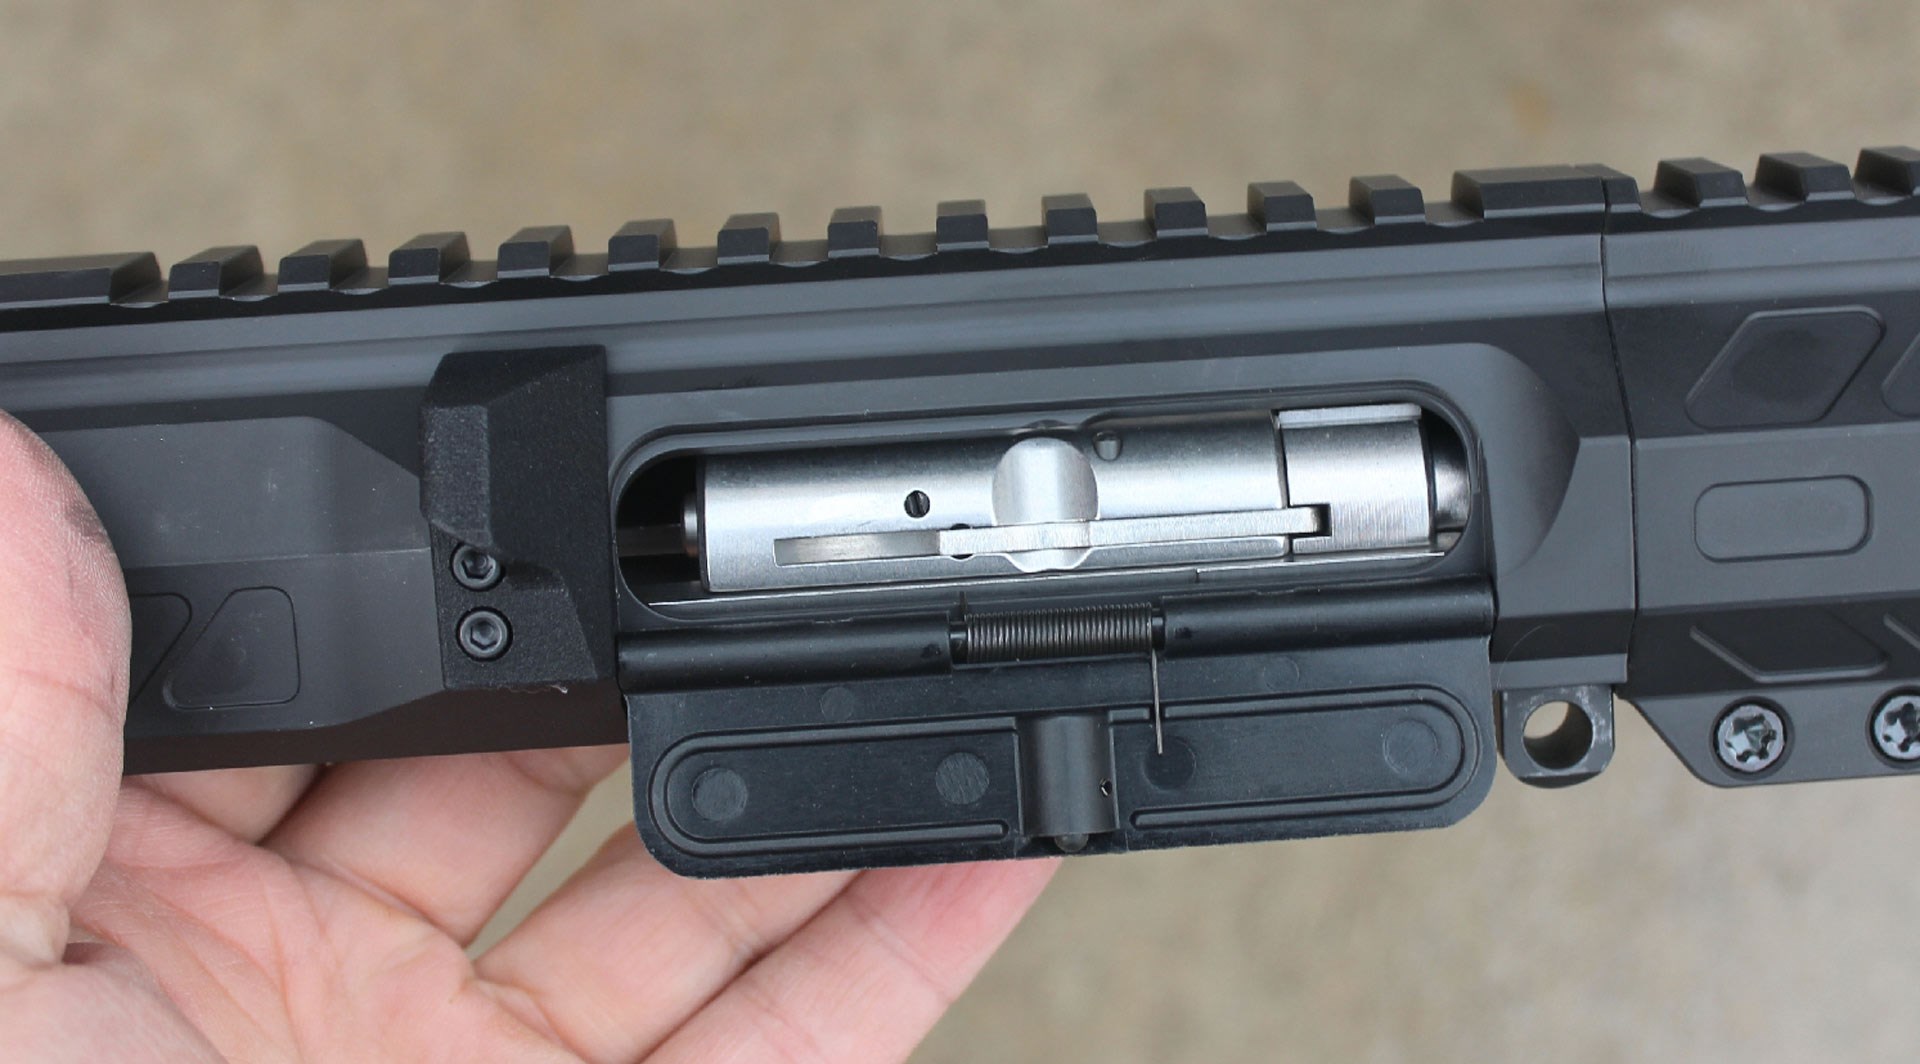 CMMG Mk4 upper receiver pistol handgun closeup metal black and silver